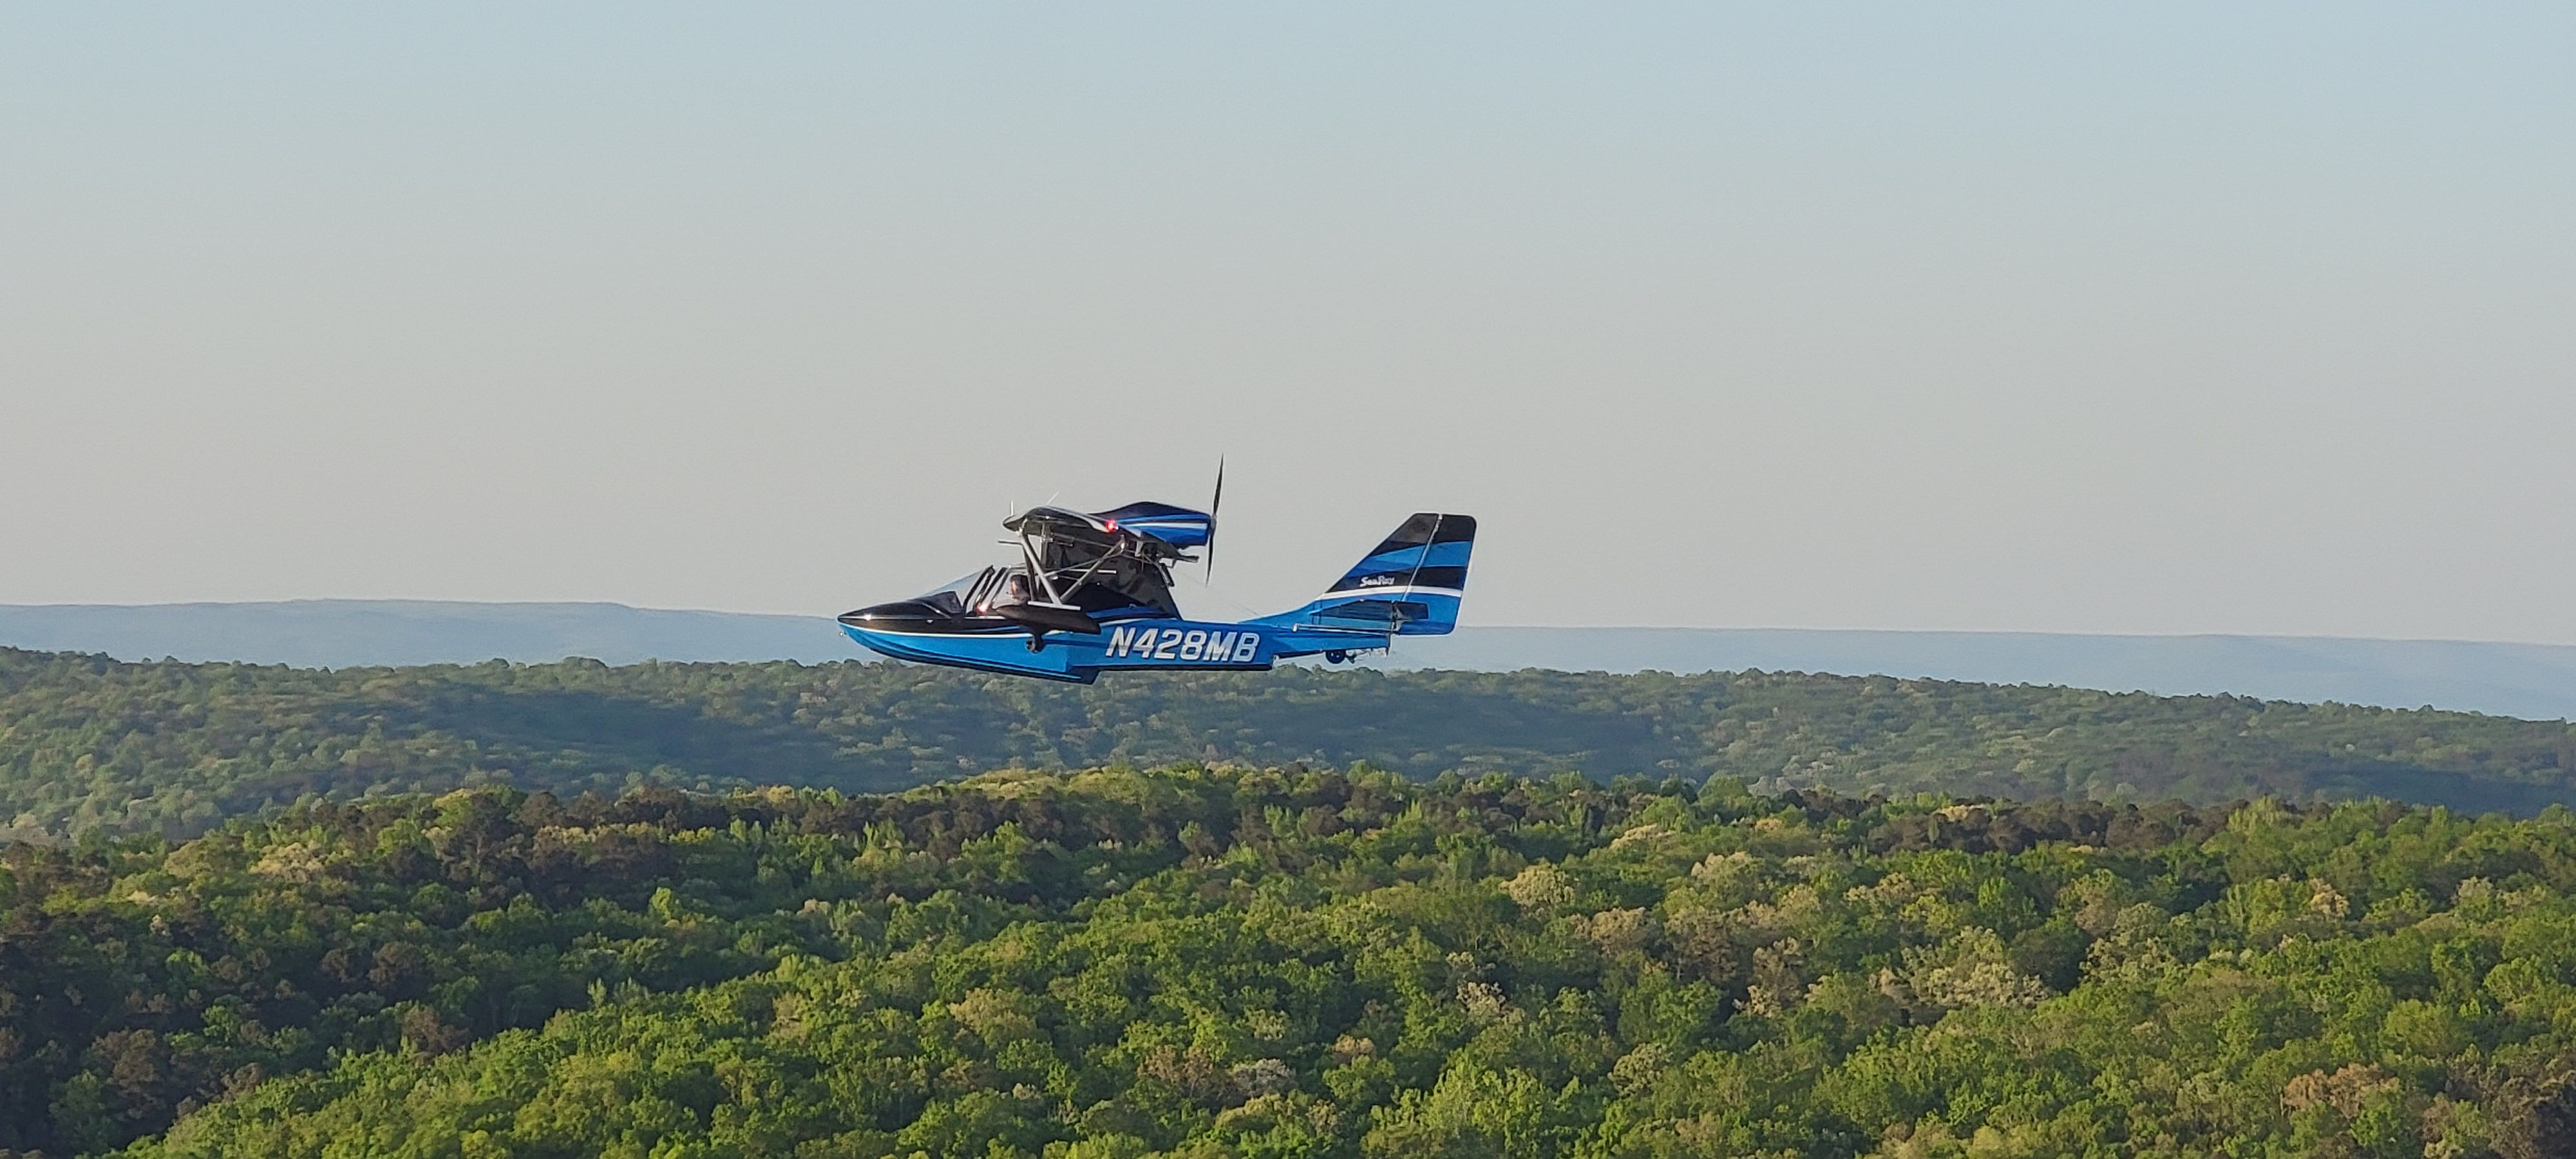 PROGRESSIVE AERODYNE SeaRey (N428MB) - Searey N428MB flying along the mountains of south Huntsville, AL. 